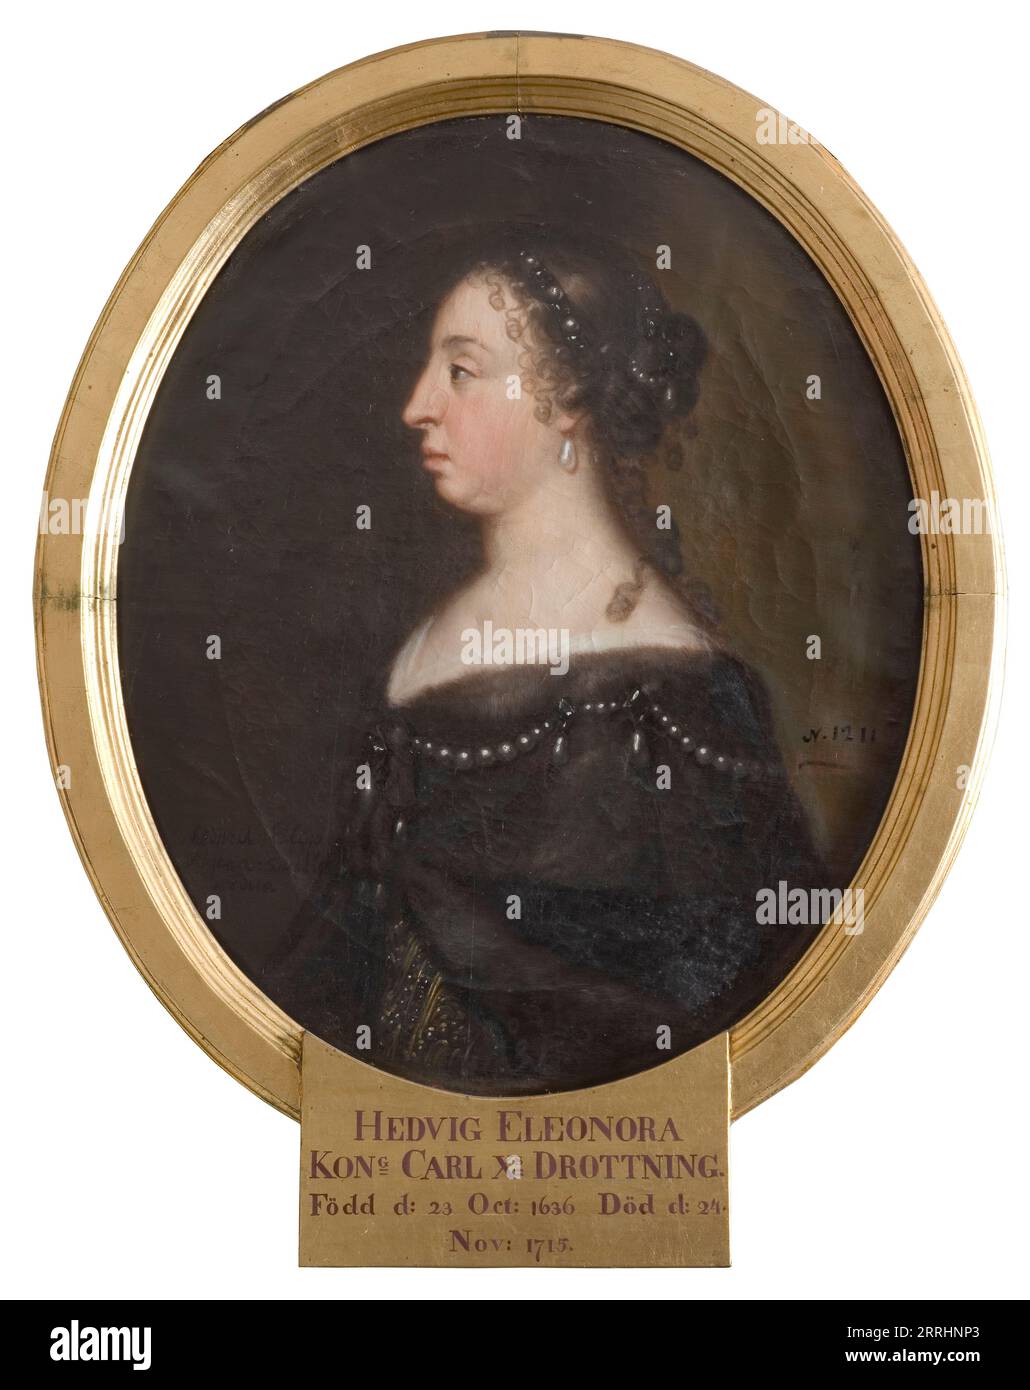 Hedvig Eleonora, 1636-1715, Princess of Holstein-Gottorp, Queen of Sweden, c17th century. Stock Photo